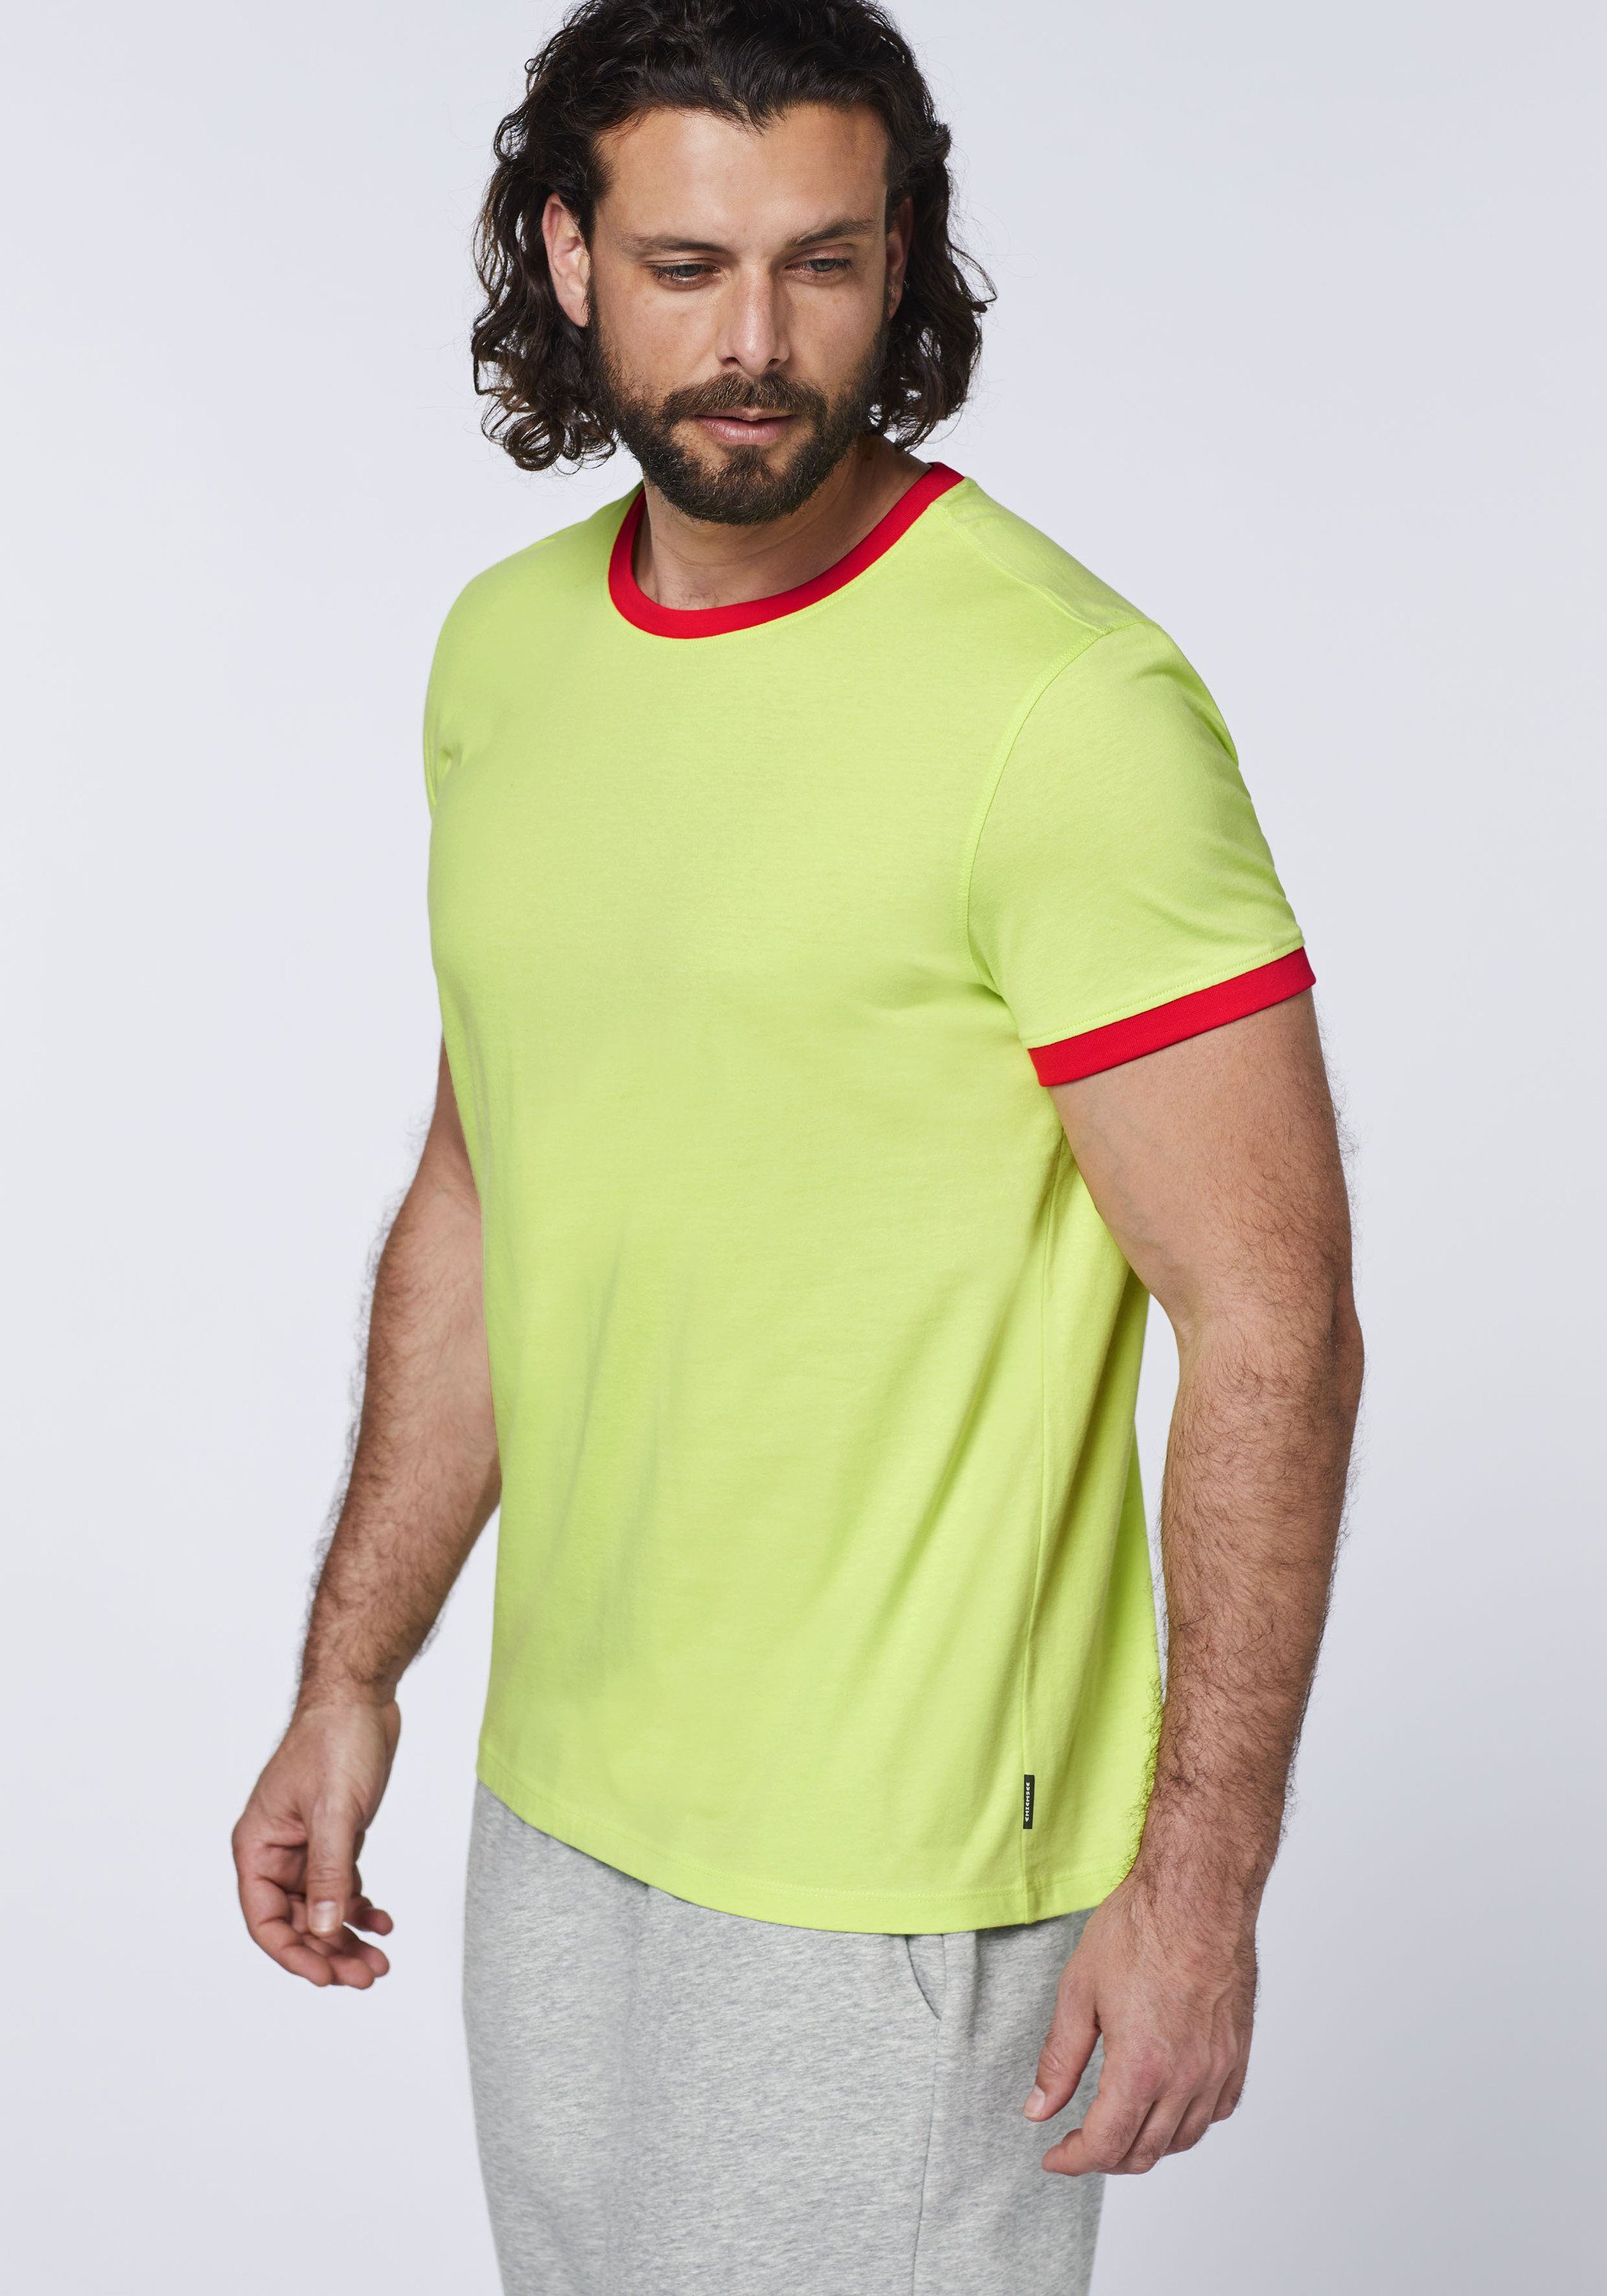 Chiemsee Print-Shirt aus 1 Green mit Shirt Sharp Label-Print Jersey 13-0535